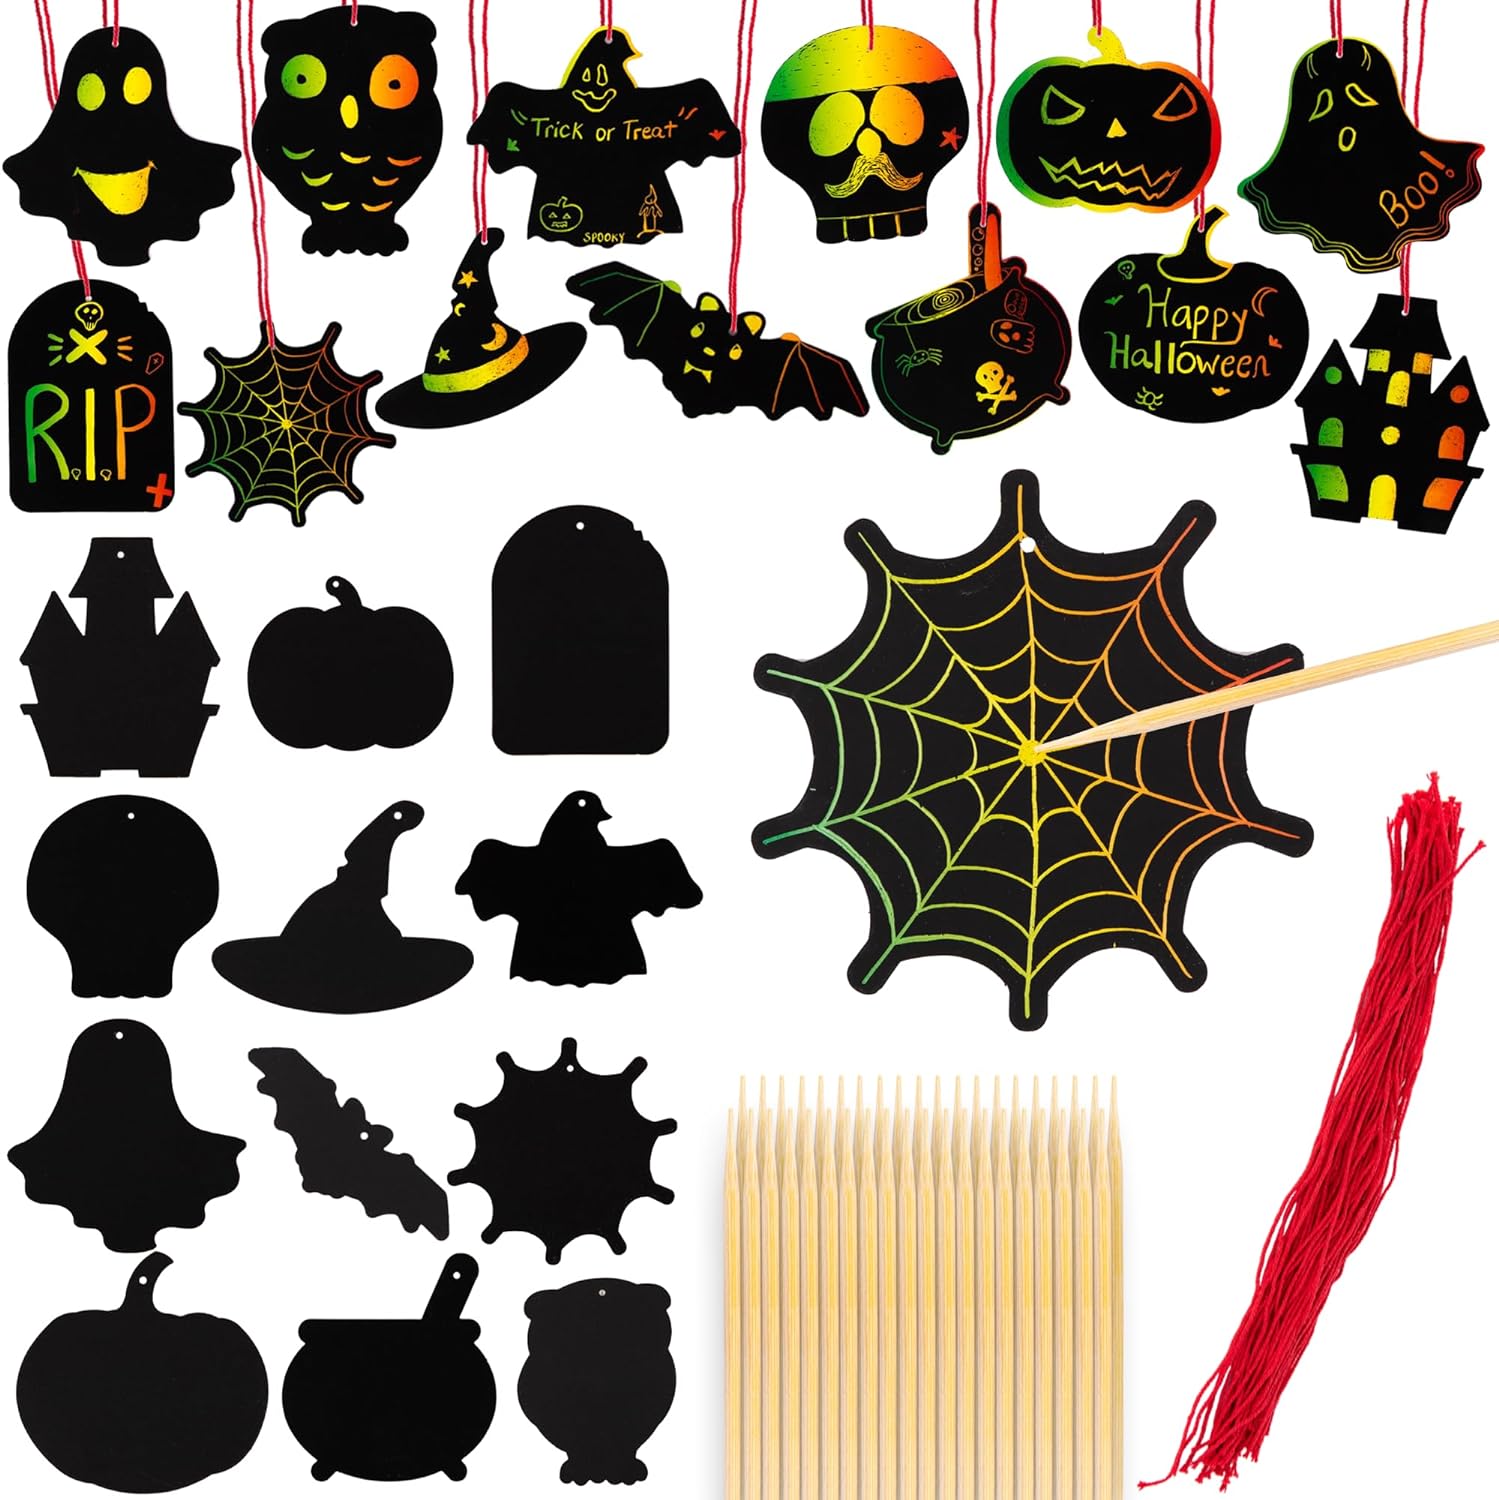 ArtCreativity Halloween Scratch Art for Kids - 60 Sets of Scratch Paper - Halloween Crafts (Bulk) with 60 Designs, 60 Sticks, & 60 Pieces of Red String - Scratch Art Party Favors for Kids Classroom